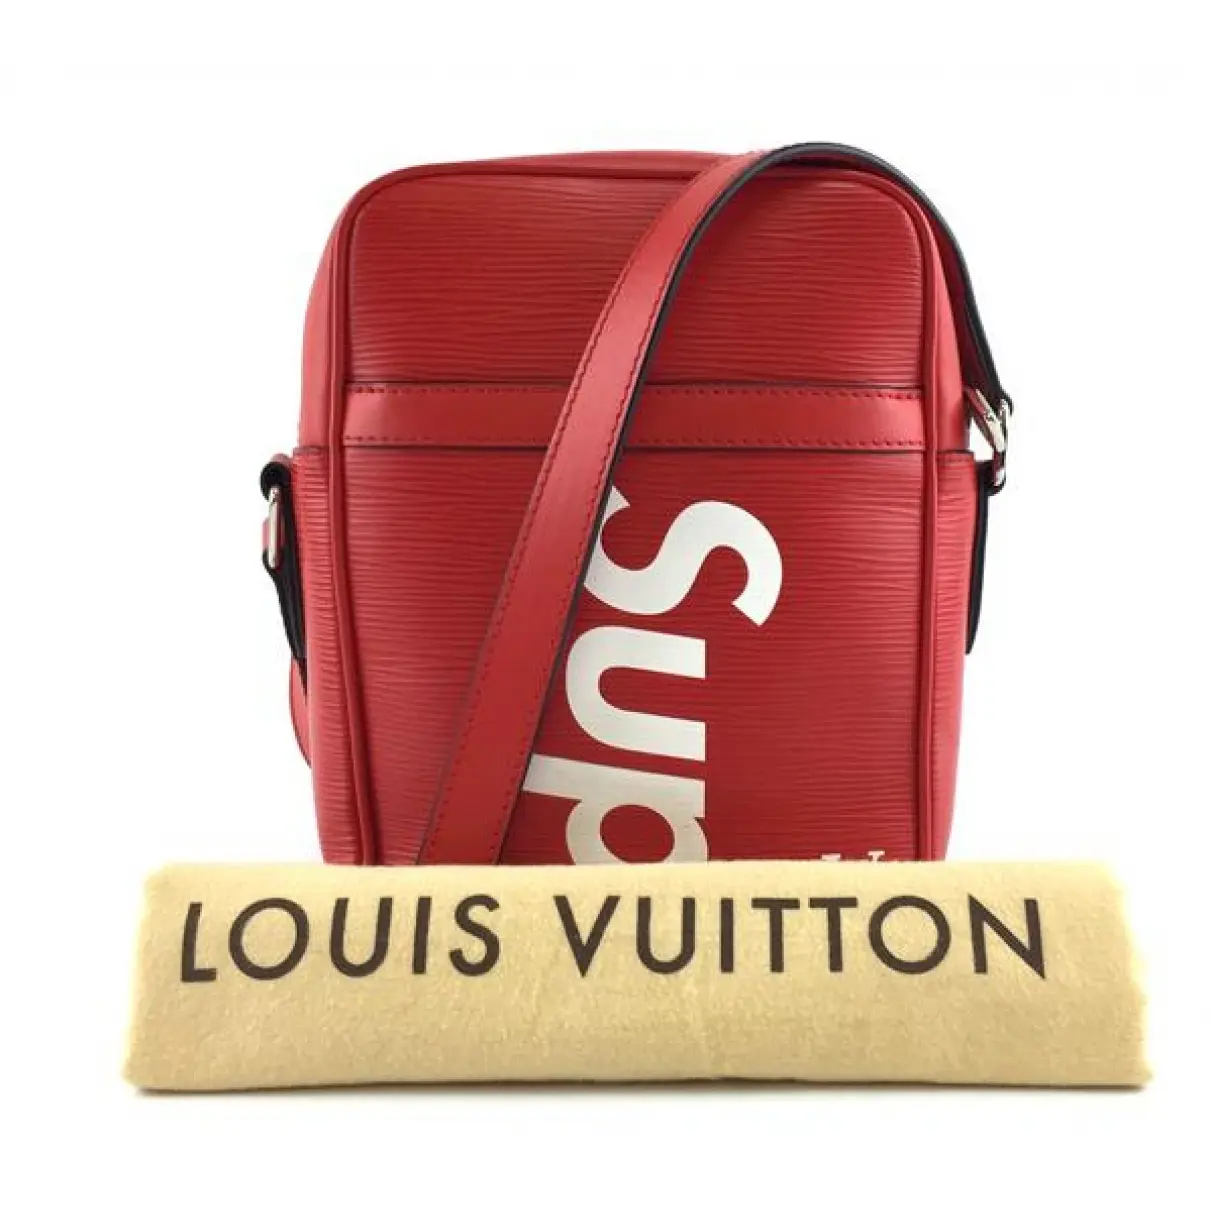 Buy Louis Vuitton x Supreme Leather crossbody bag online